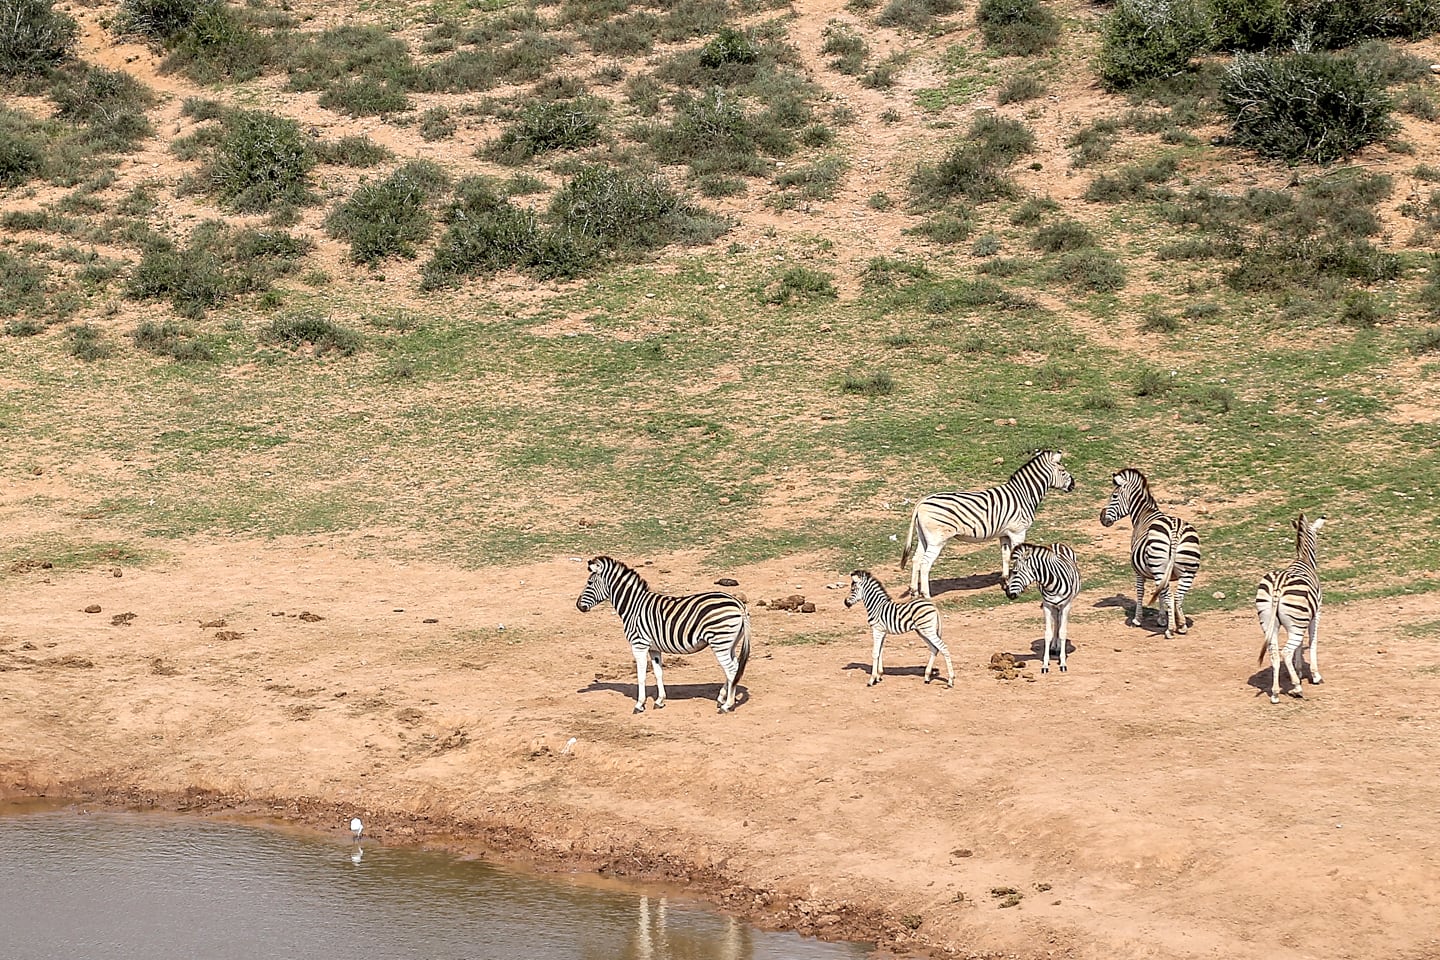 zebra near a pond at Addo Elephant National Park South Africa